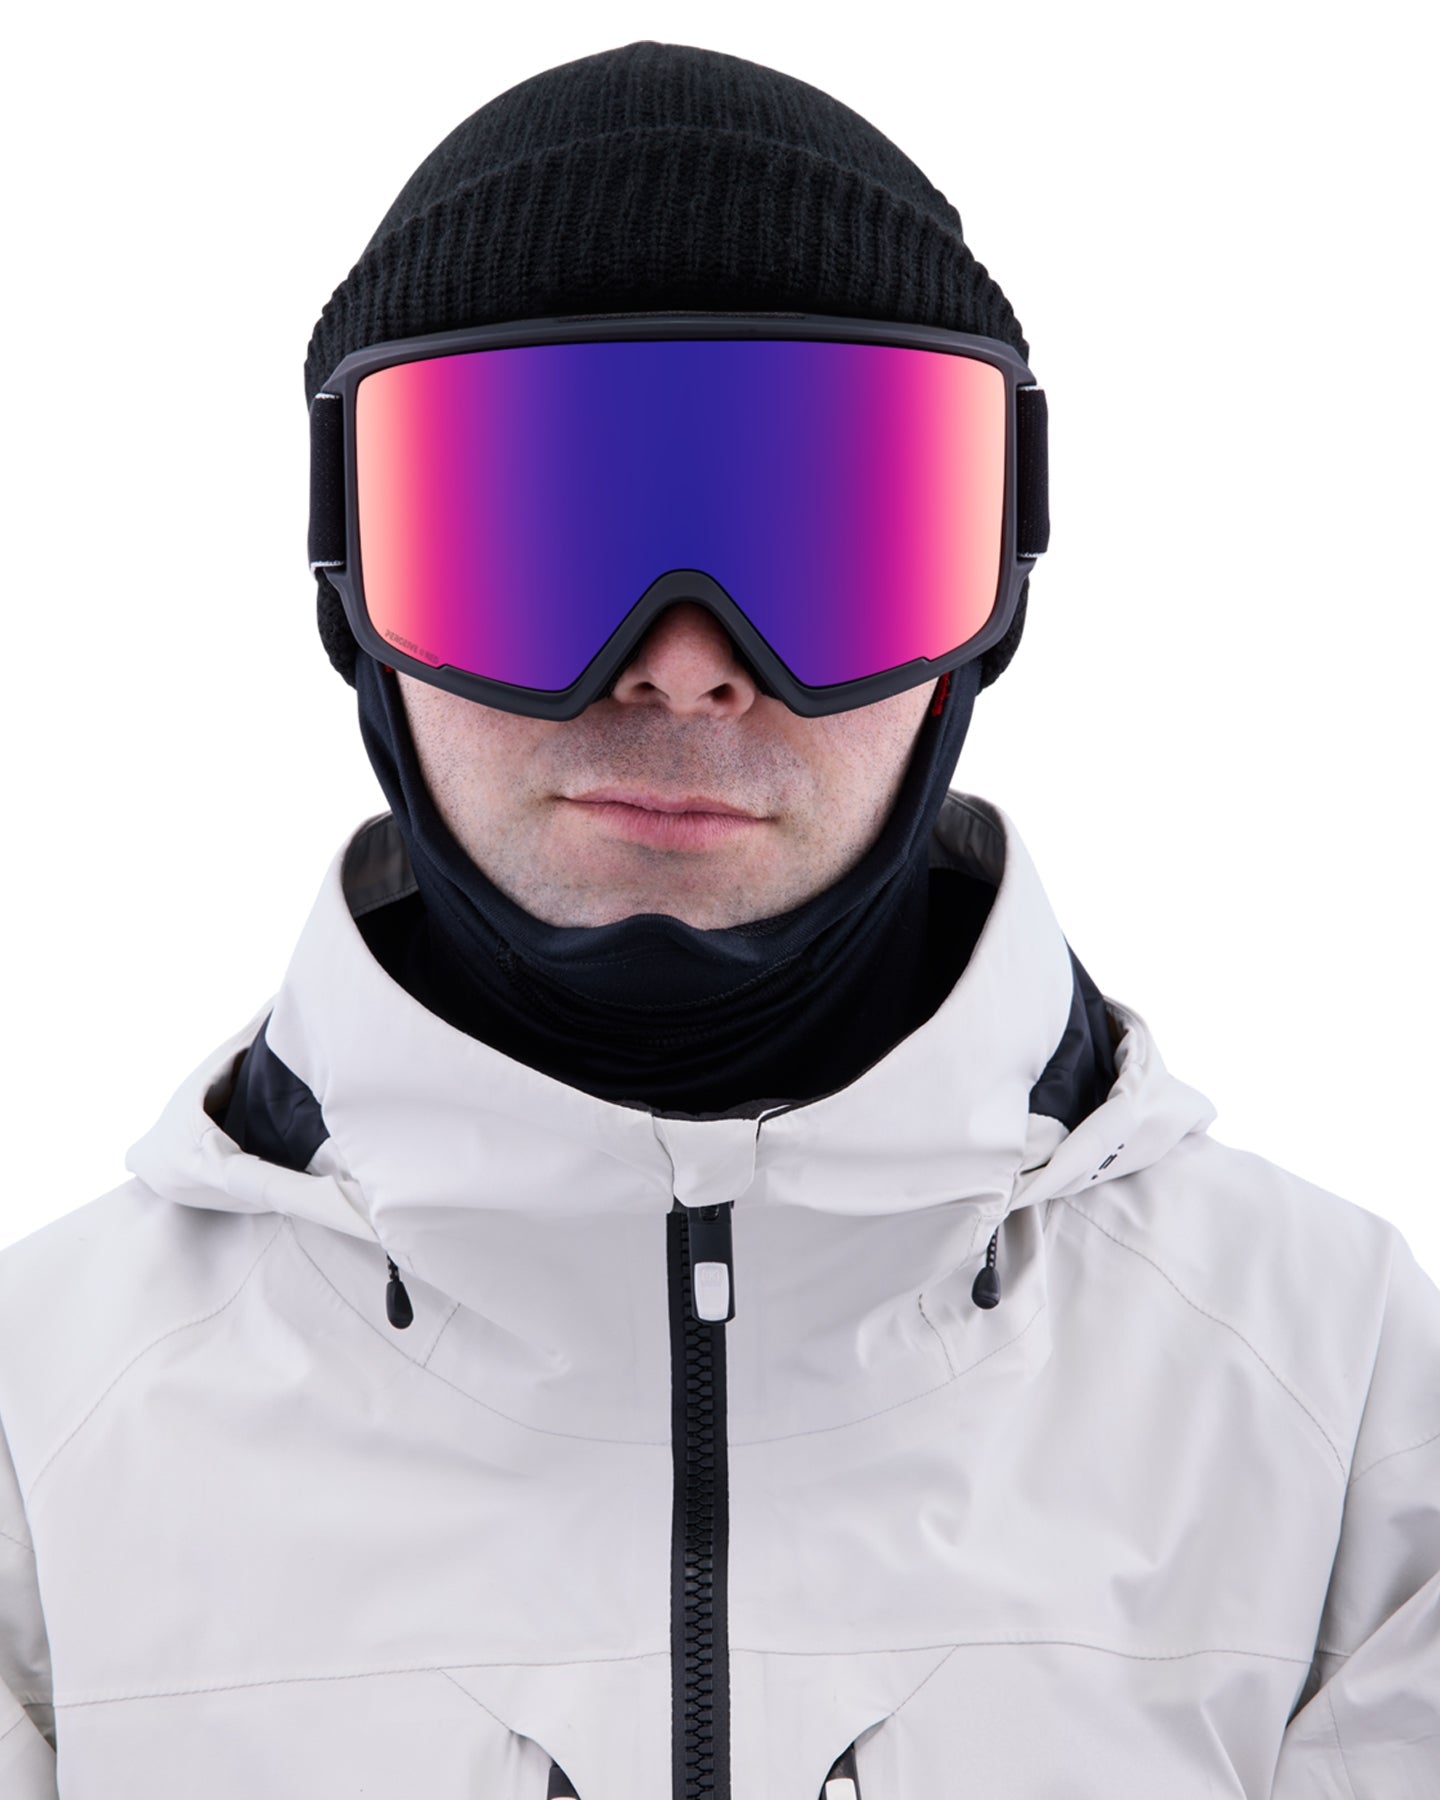 Anon M3 Low Bridge Fit Snow Goggles + Bonus Lens + MFI - Black / Perceive Sunny Red Men's Snow Goggles - SnowSkiersWarehouse